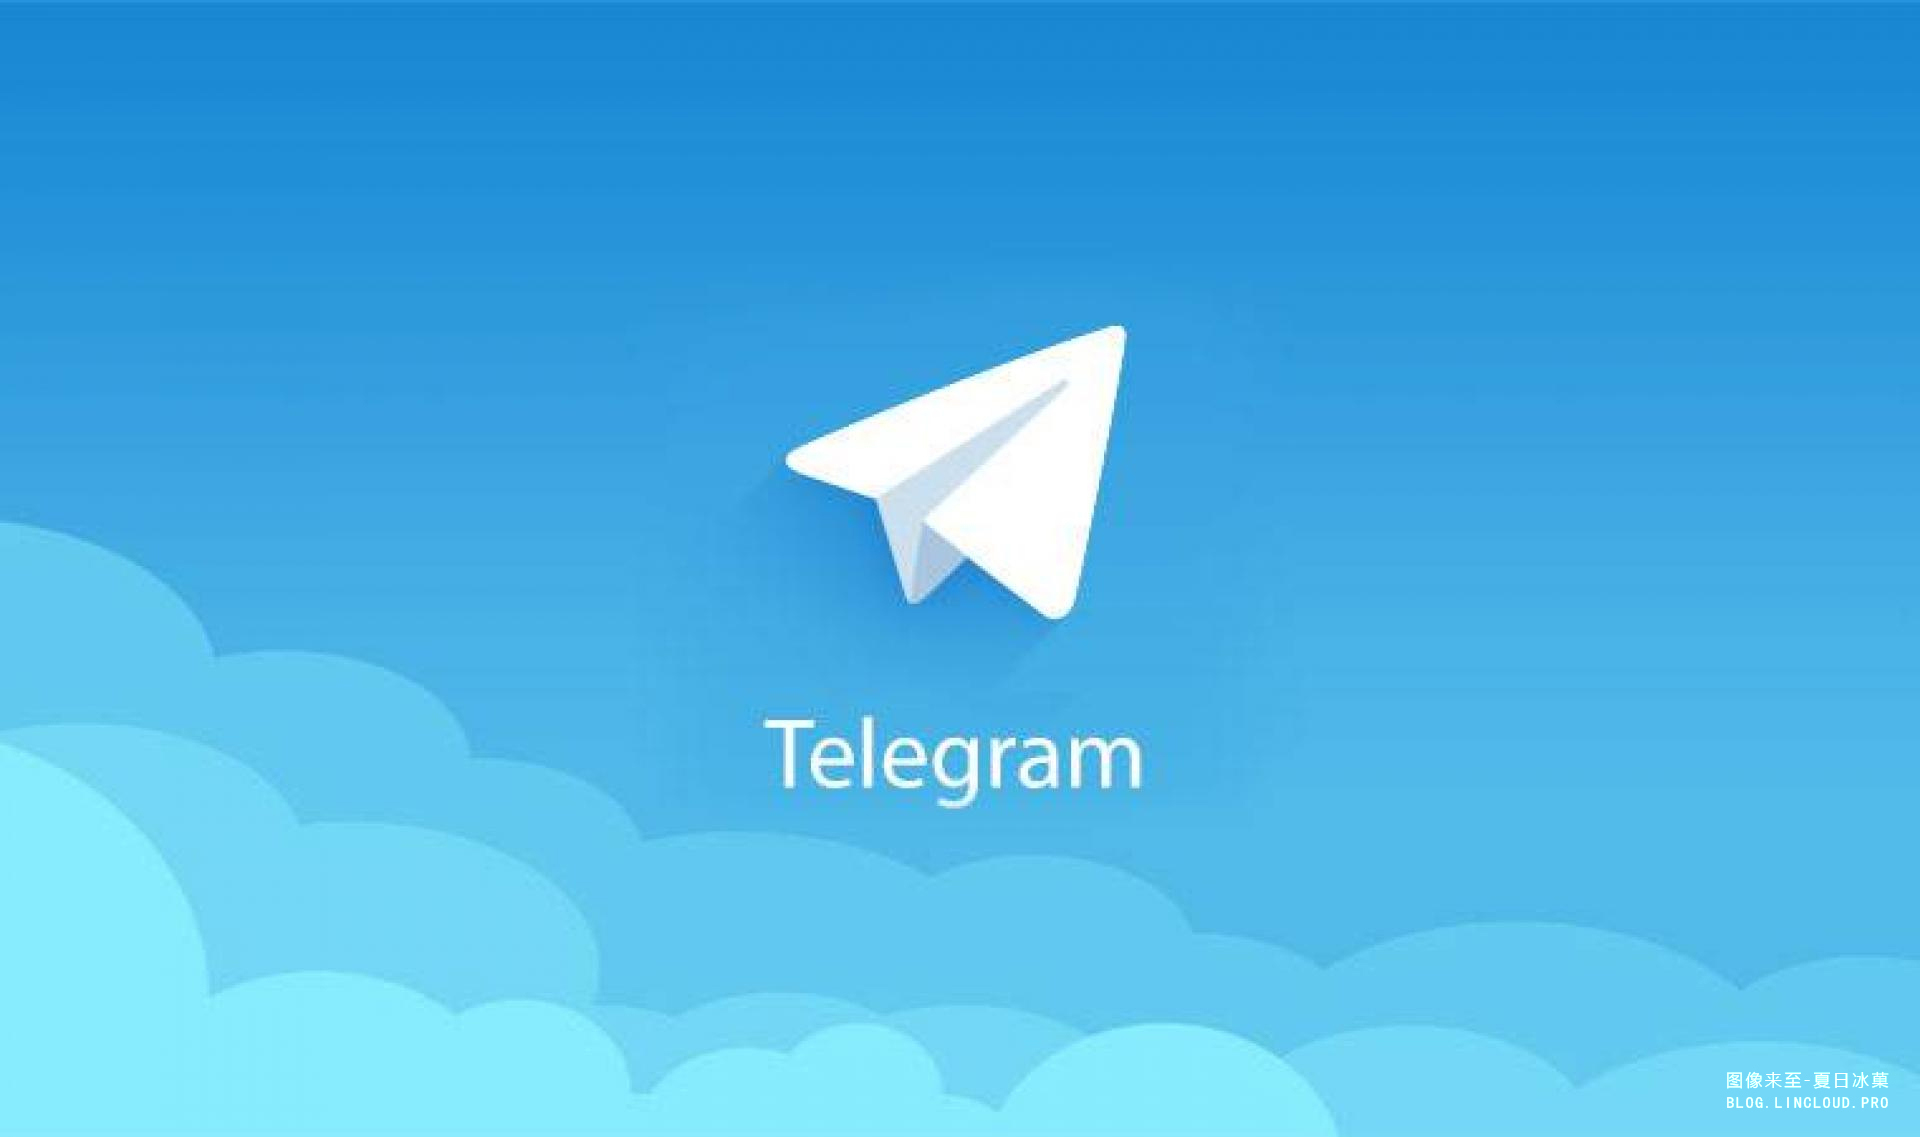 Telegrambt